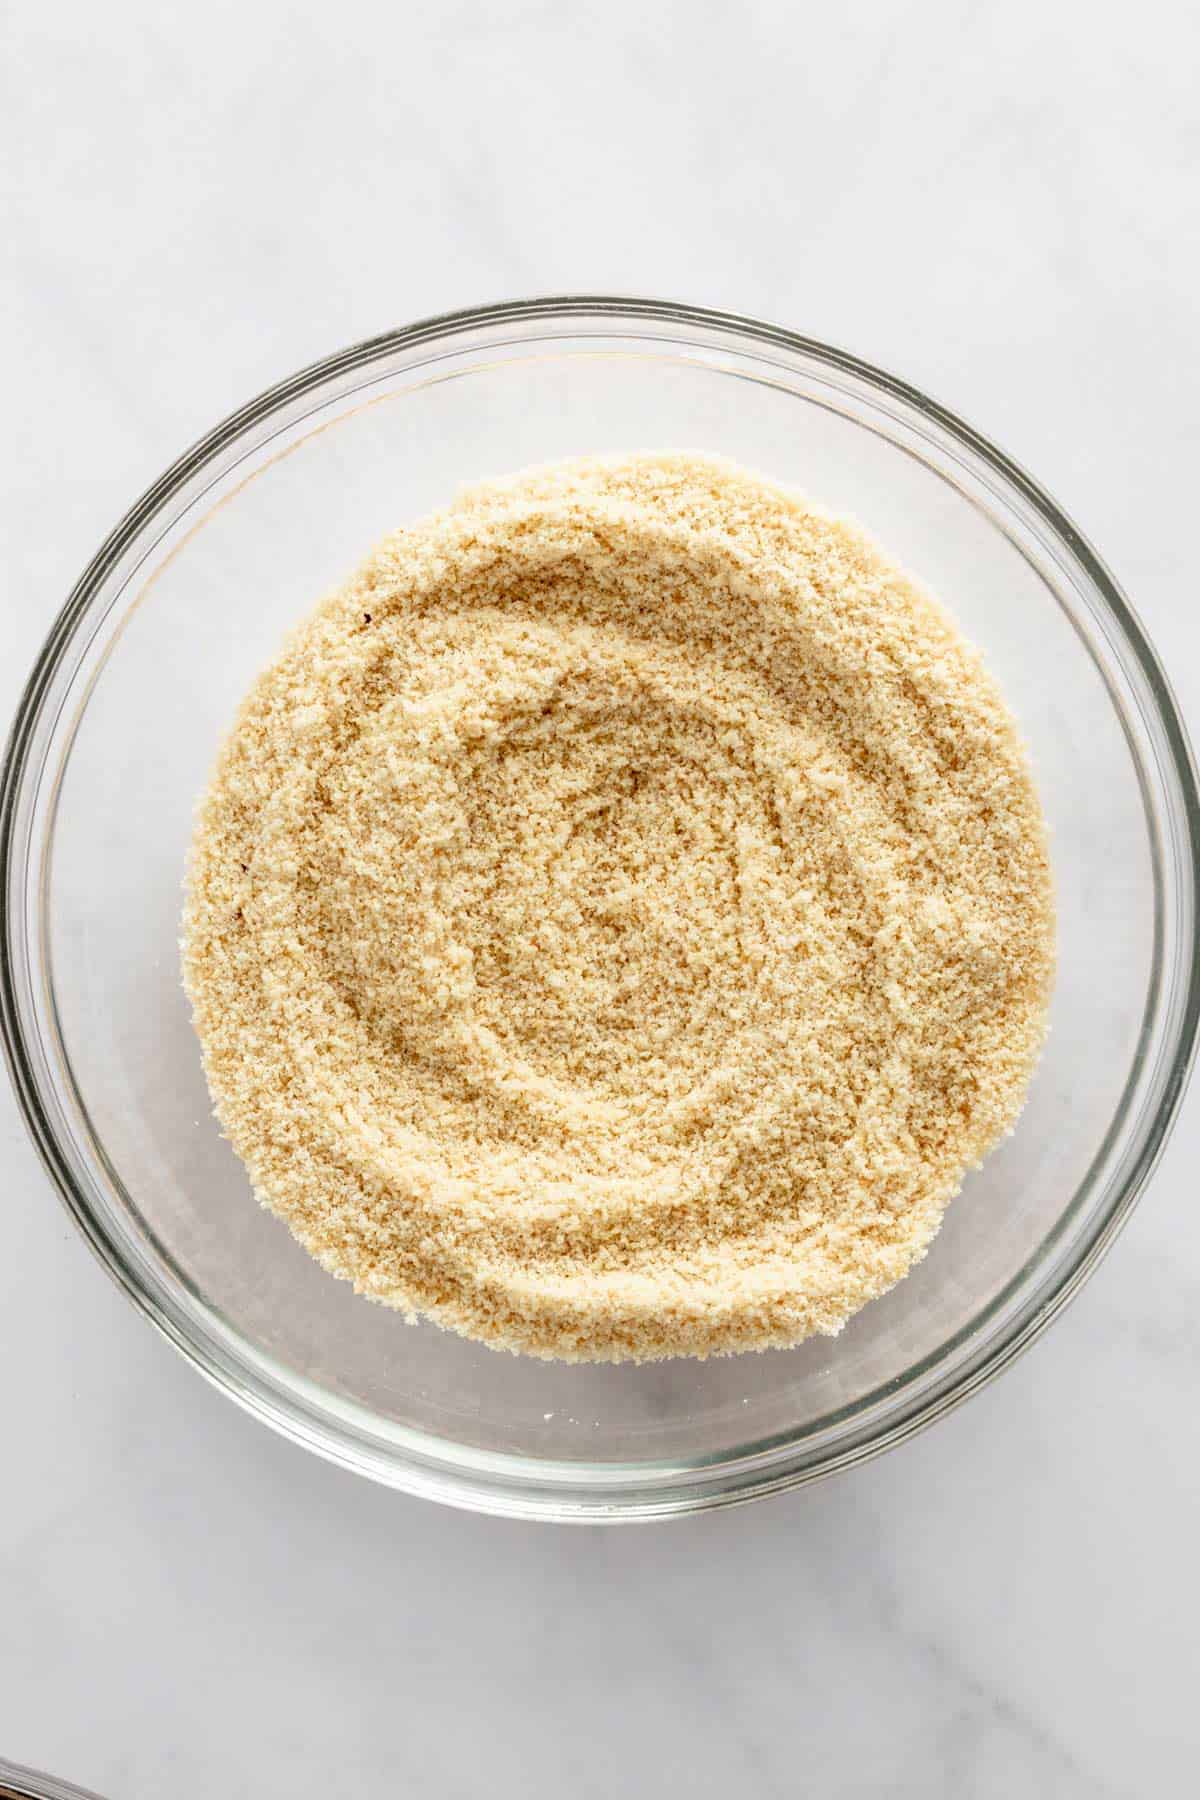 almond flour in a bowl.